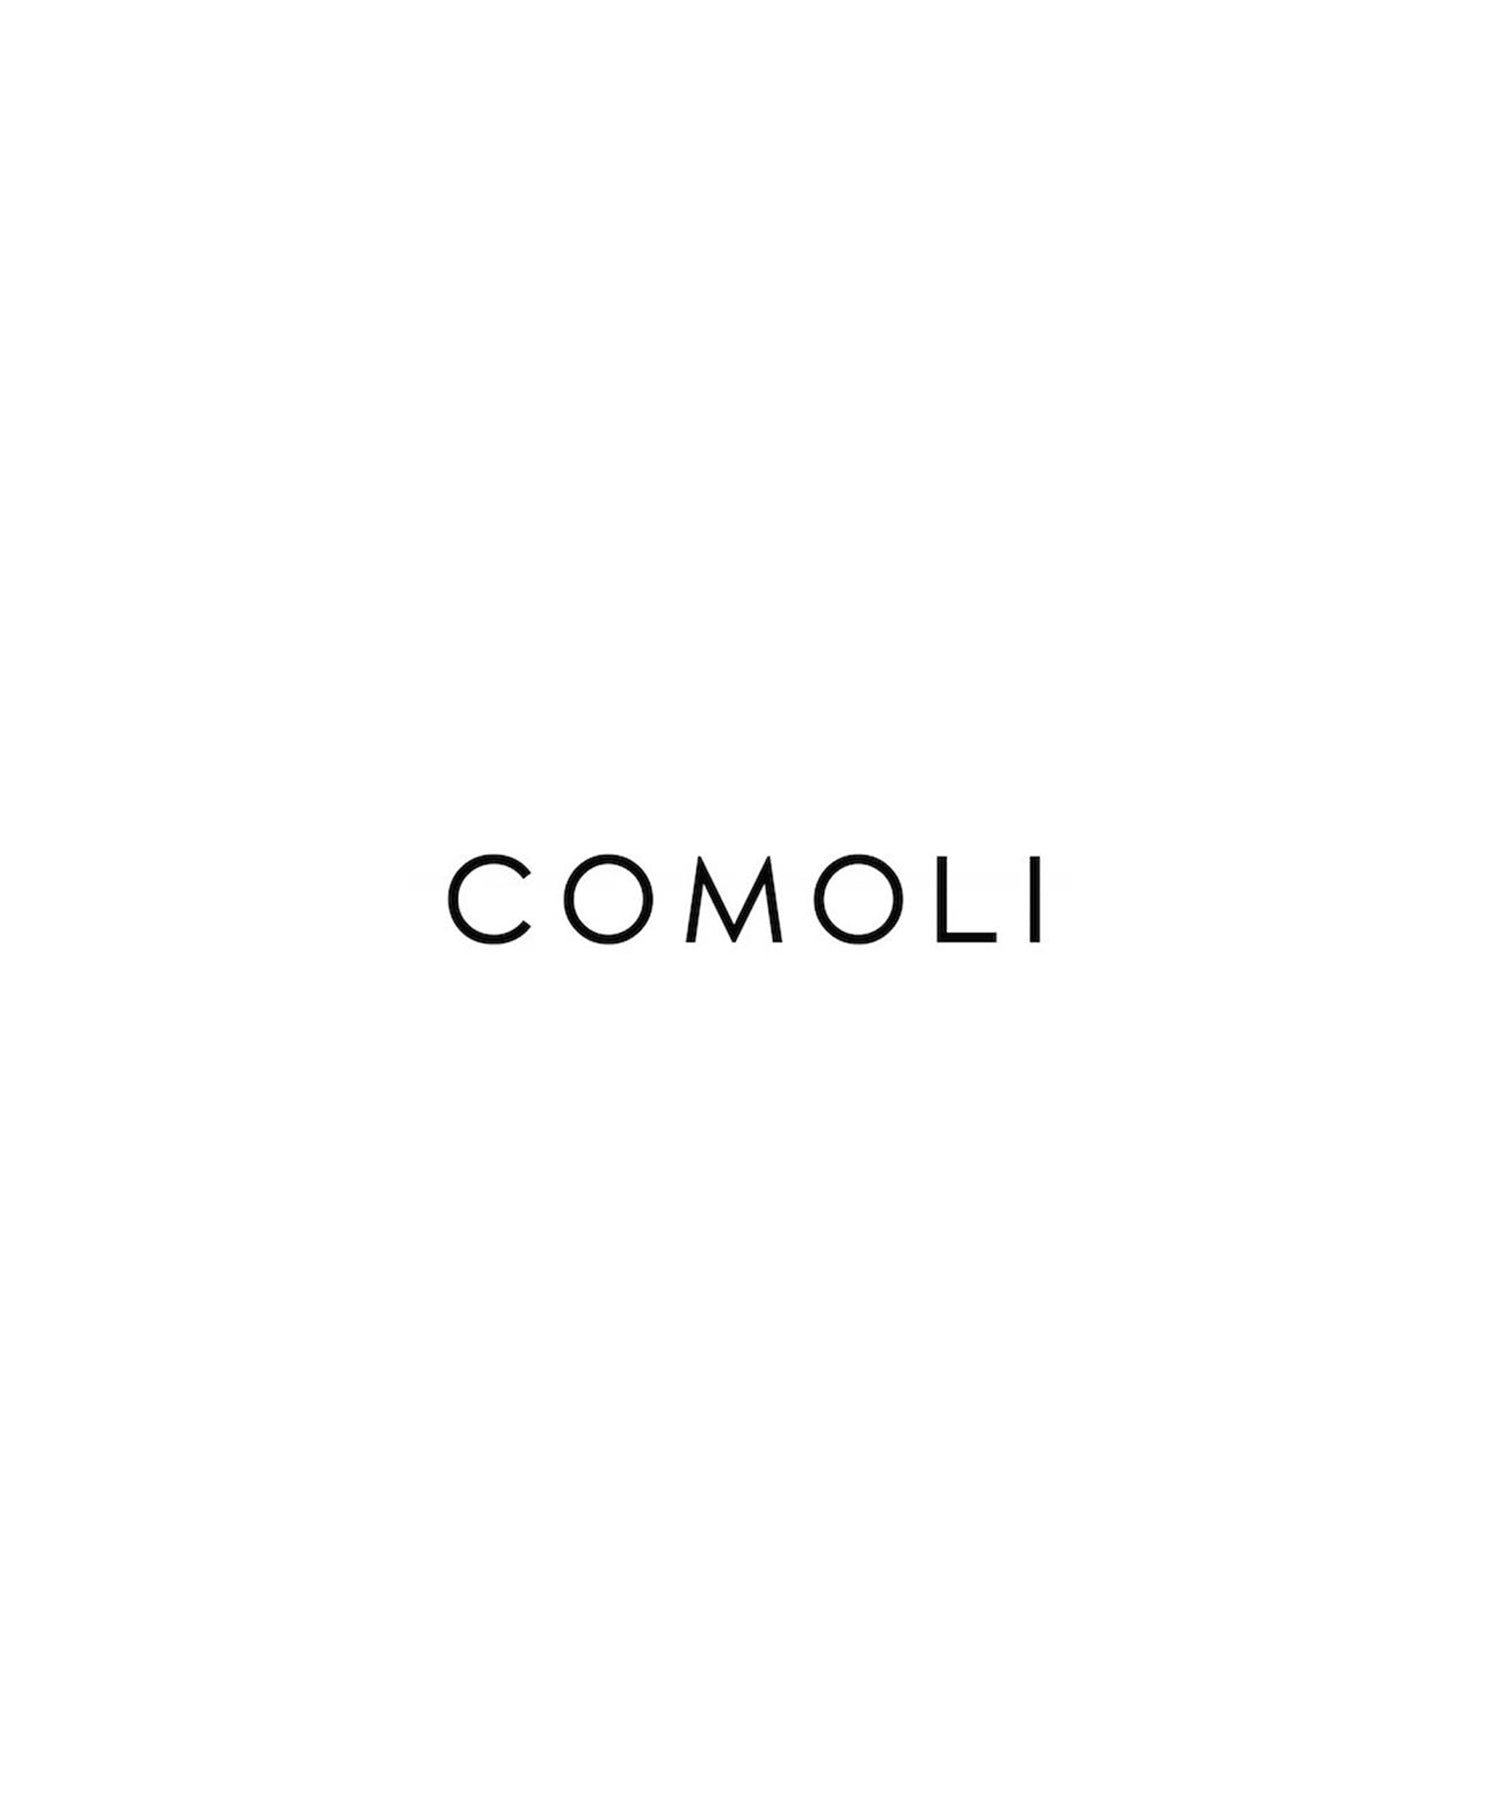 COMOLI 2月16日(金)発売の新作商品